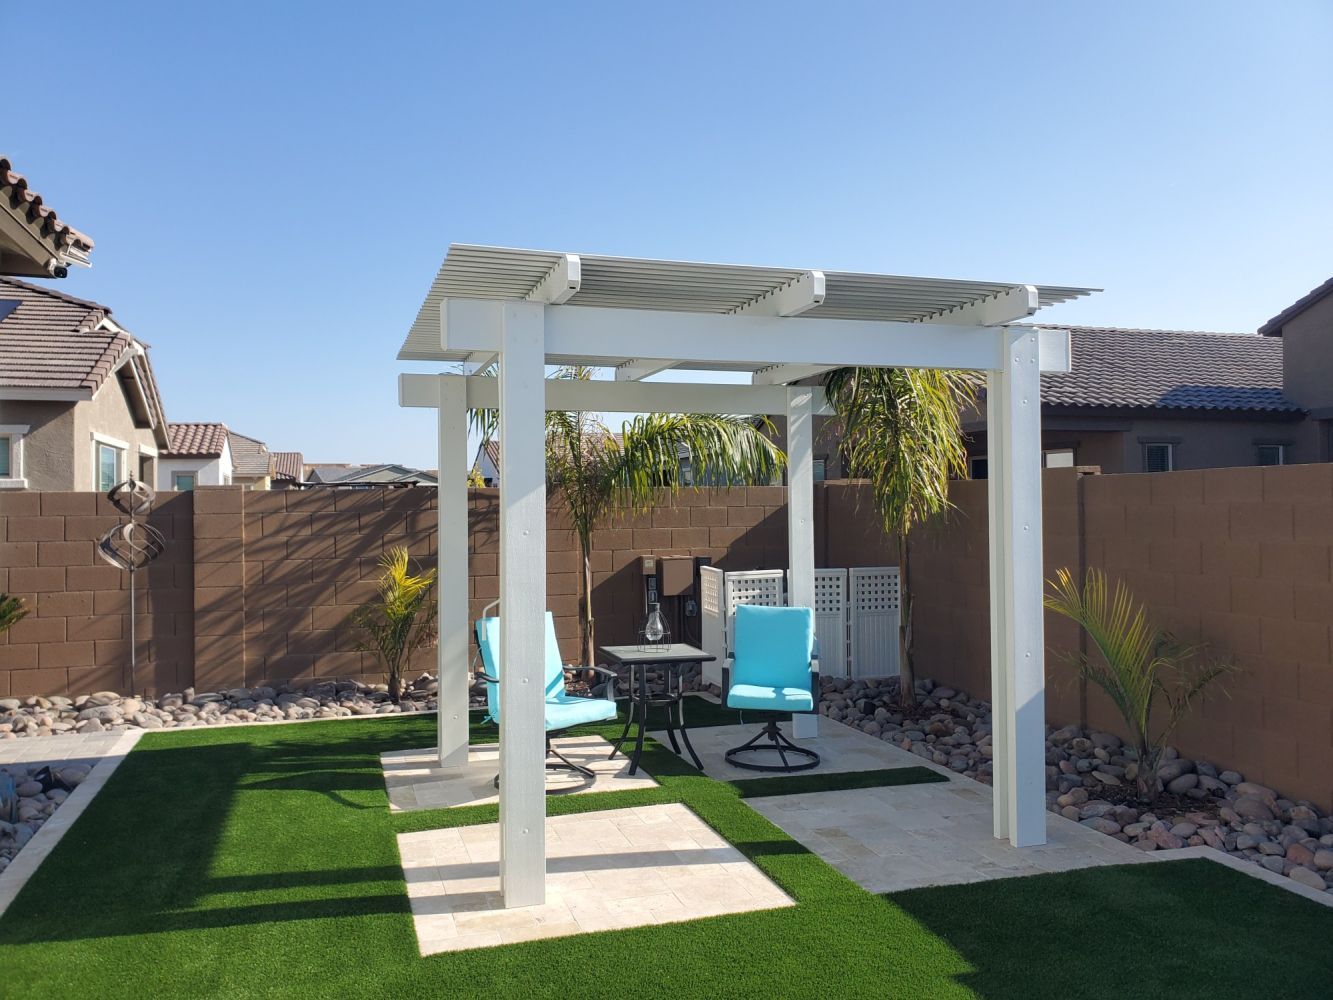 Versatile Solara Adjustable Patio Cover allowing customizable sunlight control in Phoenix, AZ.